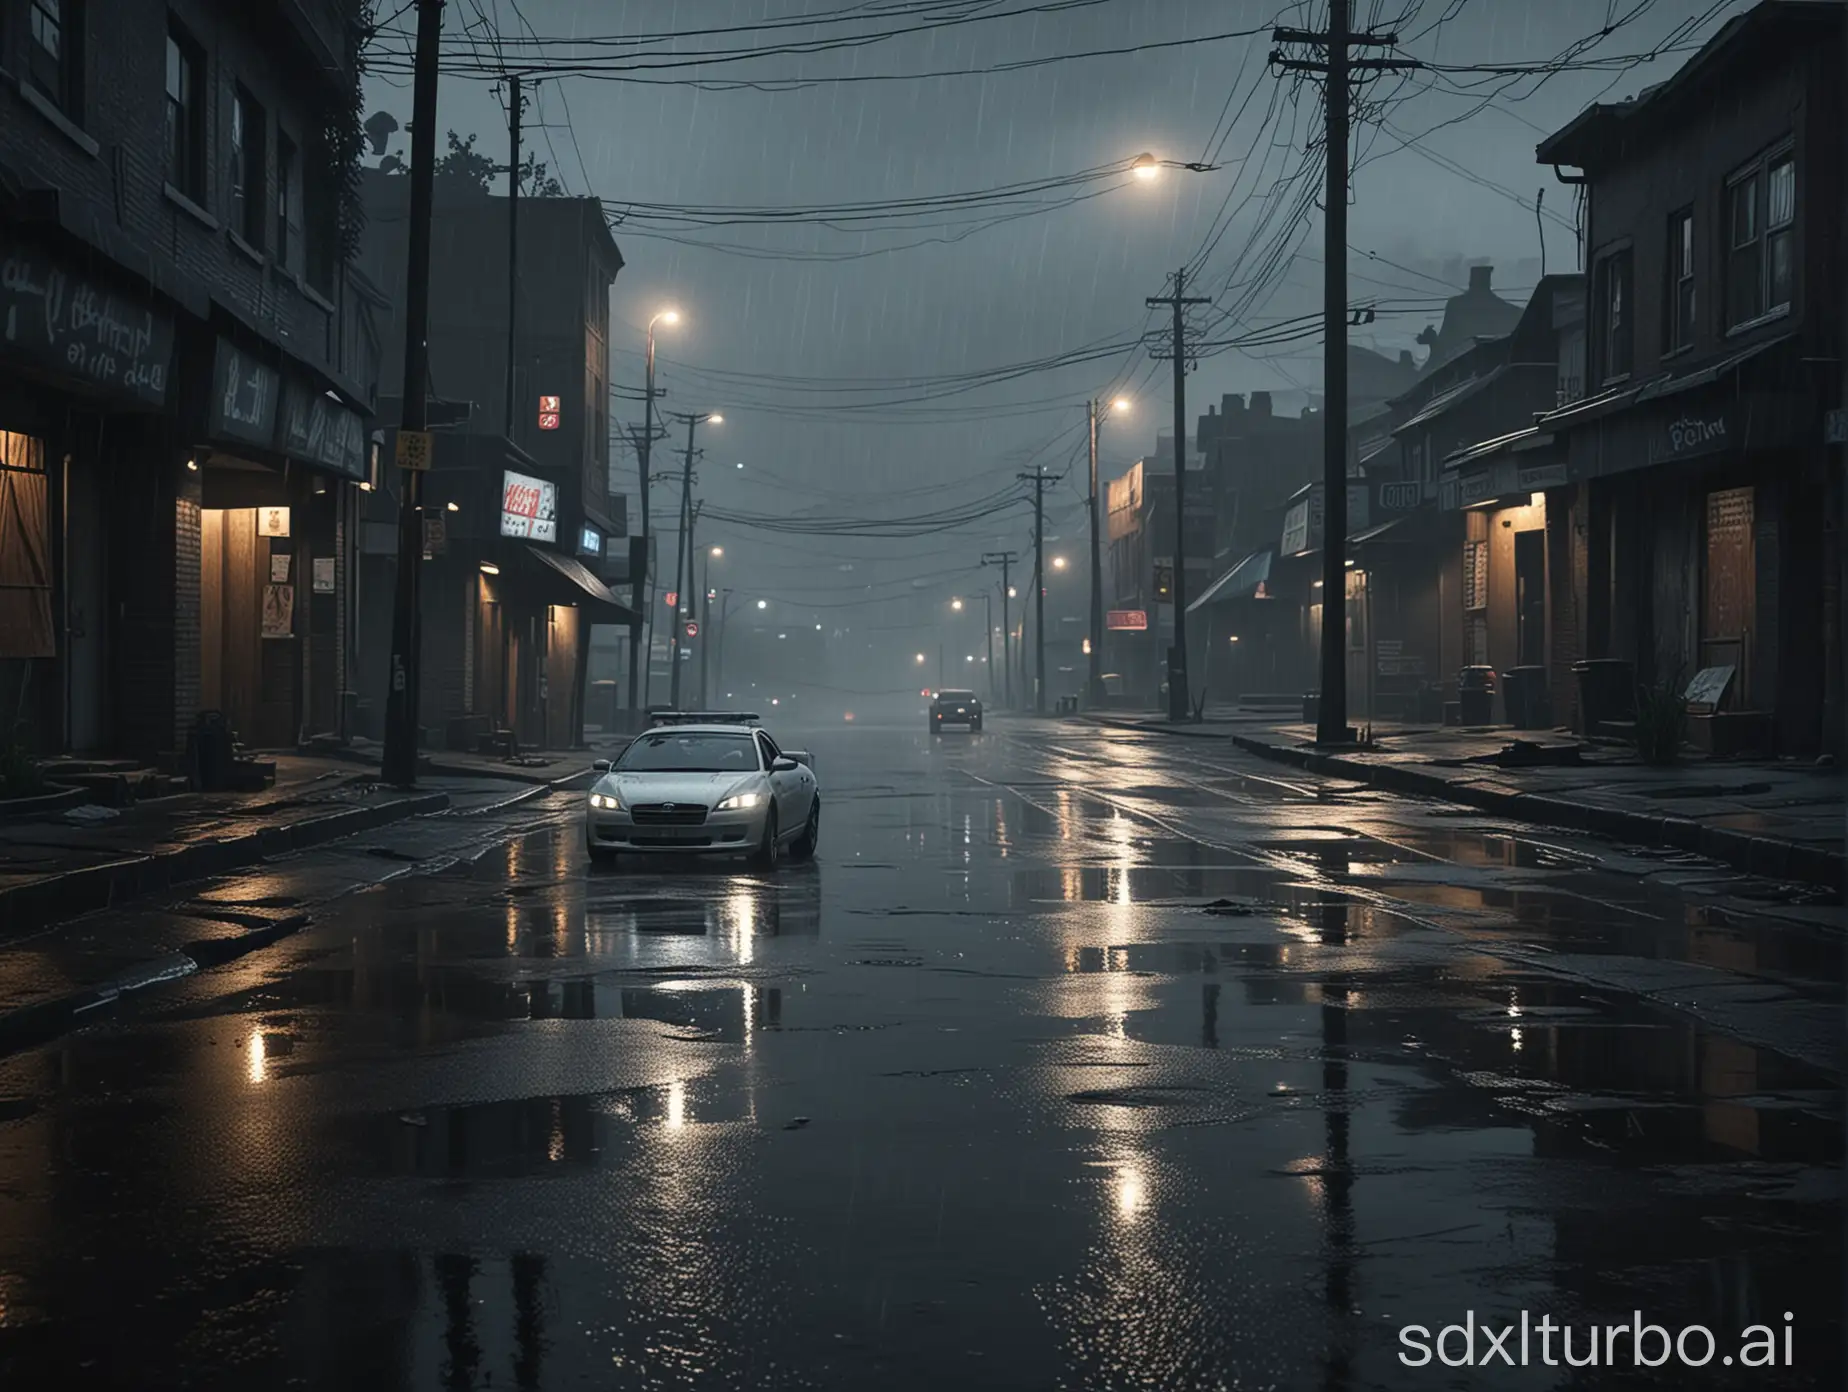 Urban-Street-Scene-Rainy-Night-in-a-Cinematic-Dark-Ambiance